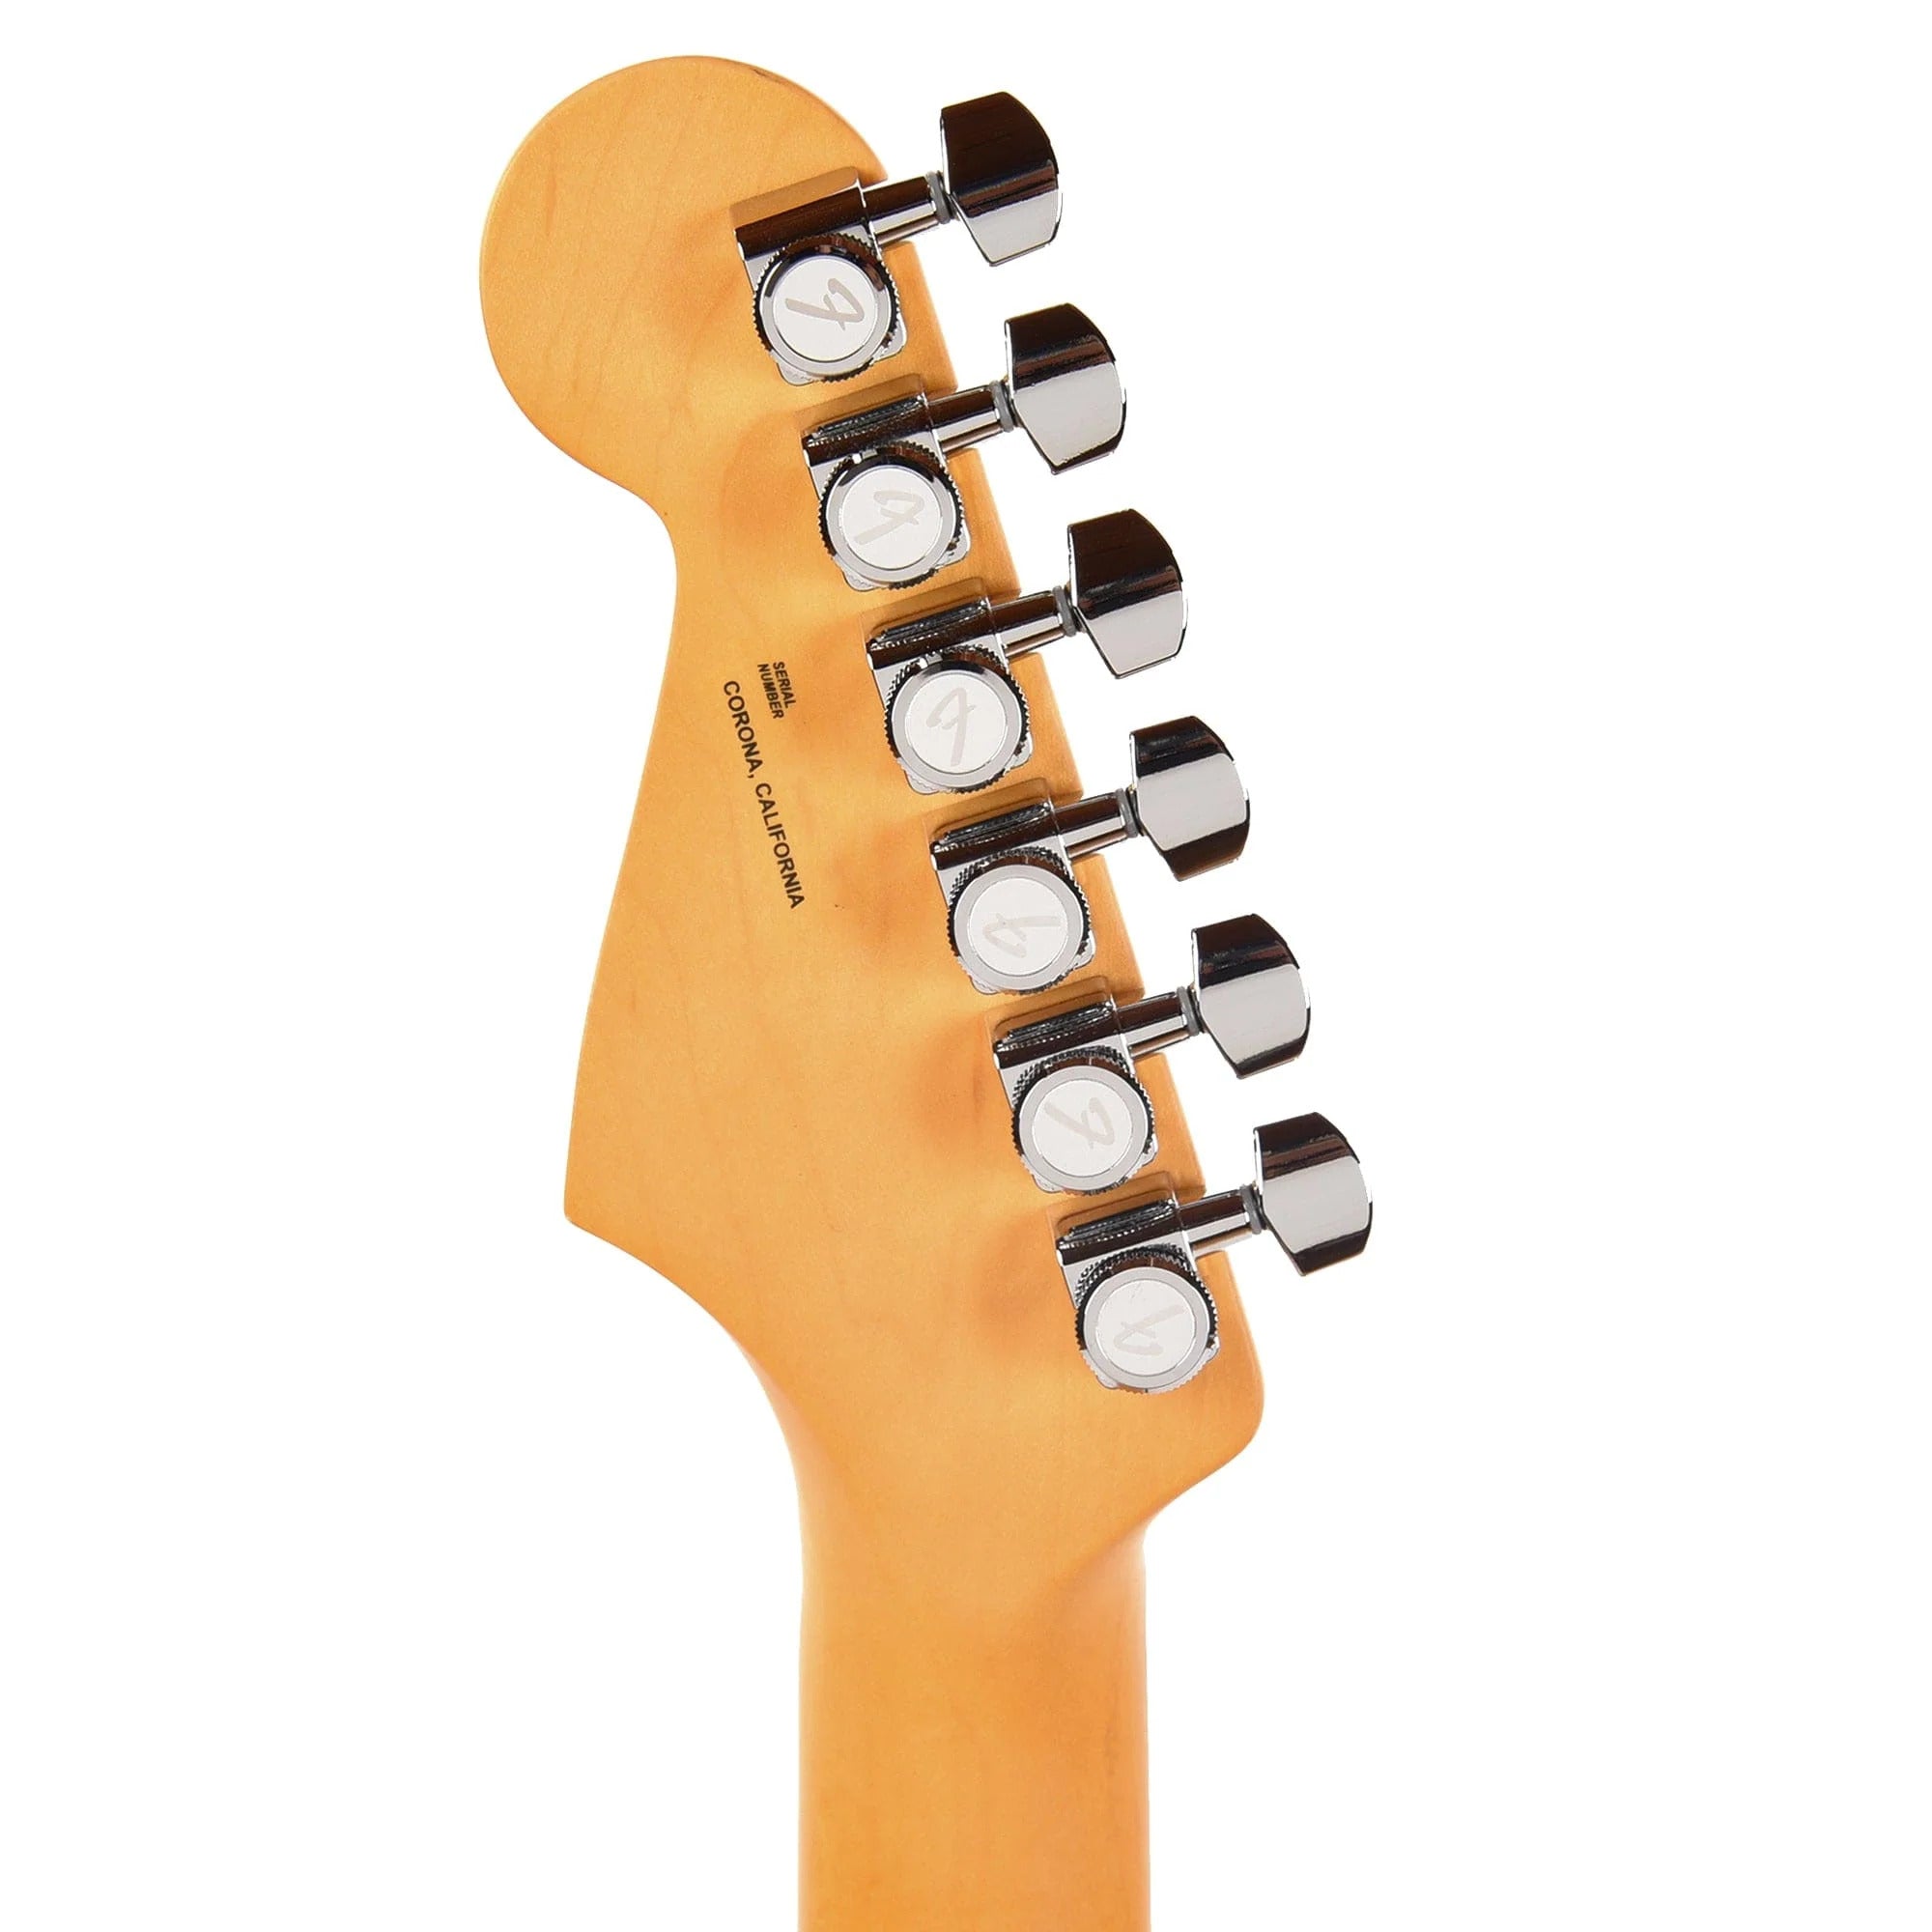 Fender American Ultra Stratocaster Mystic Pine & Anodized Gold Pickguard